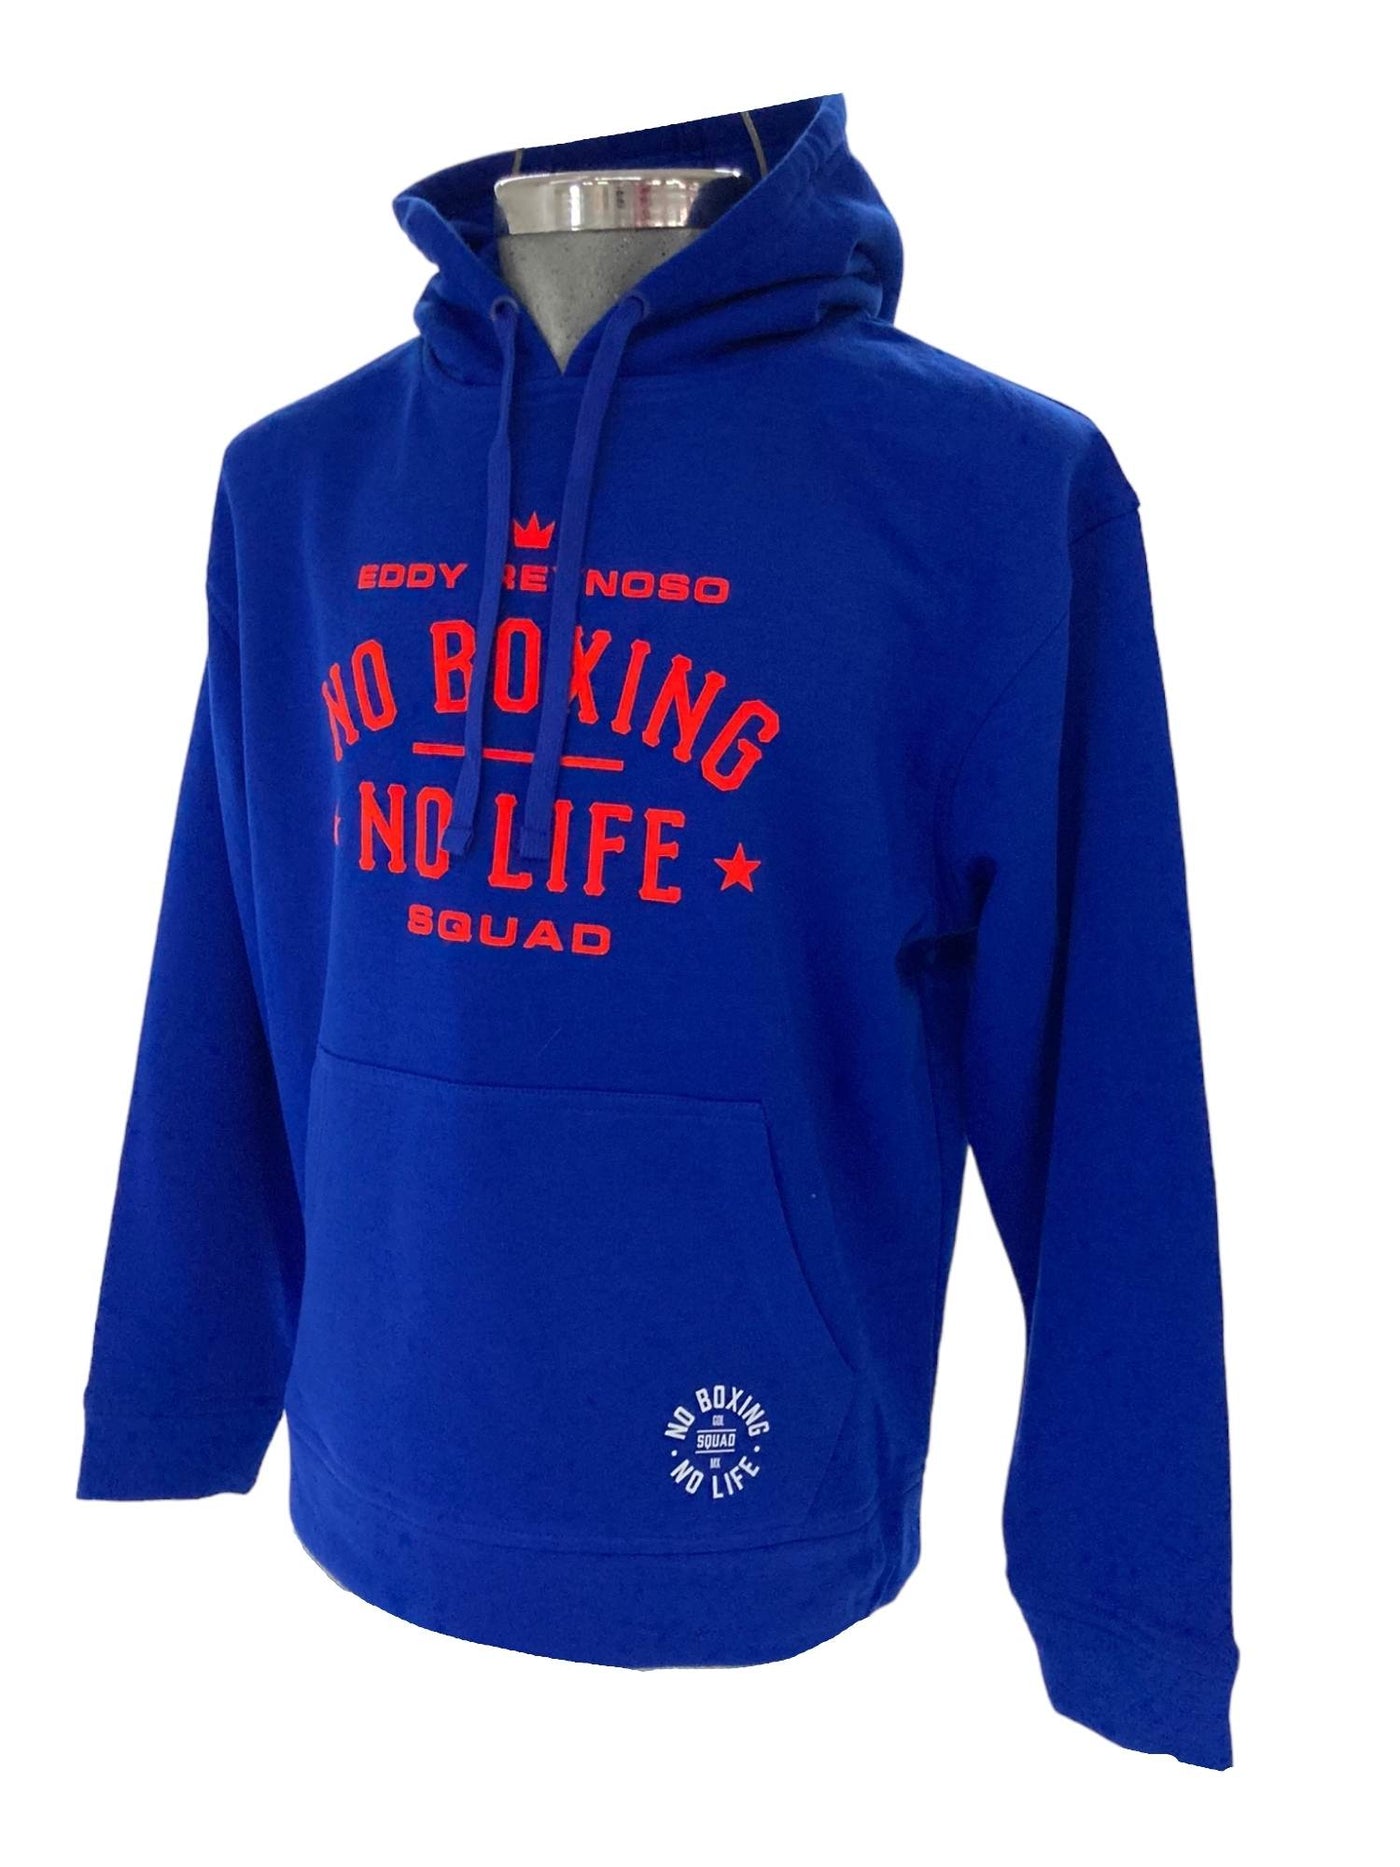 No Boxing No Life SQUAD Hoodie - Eddy Reynoso Special Edition